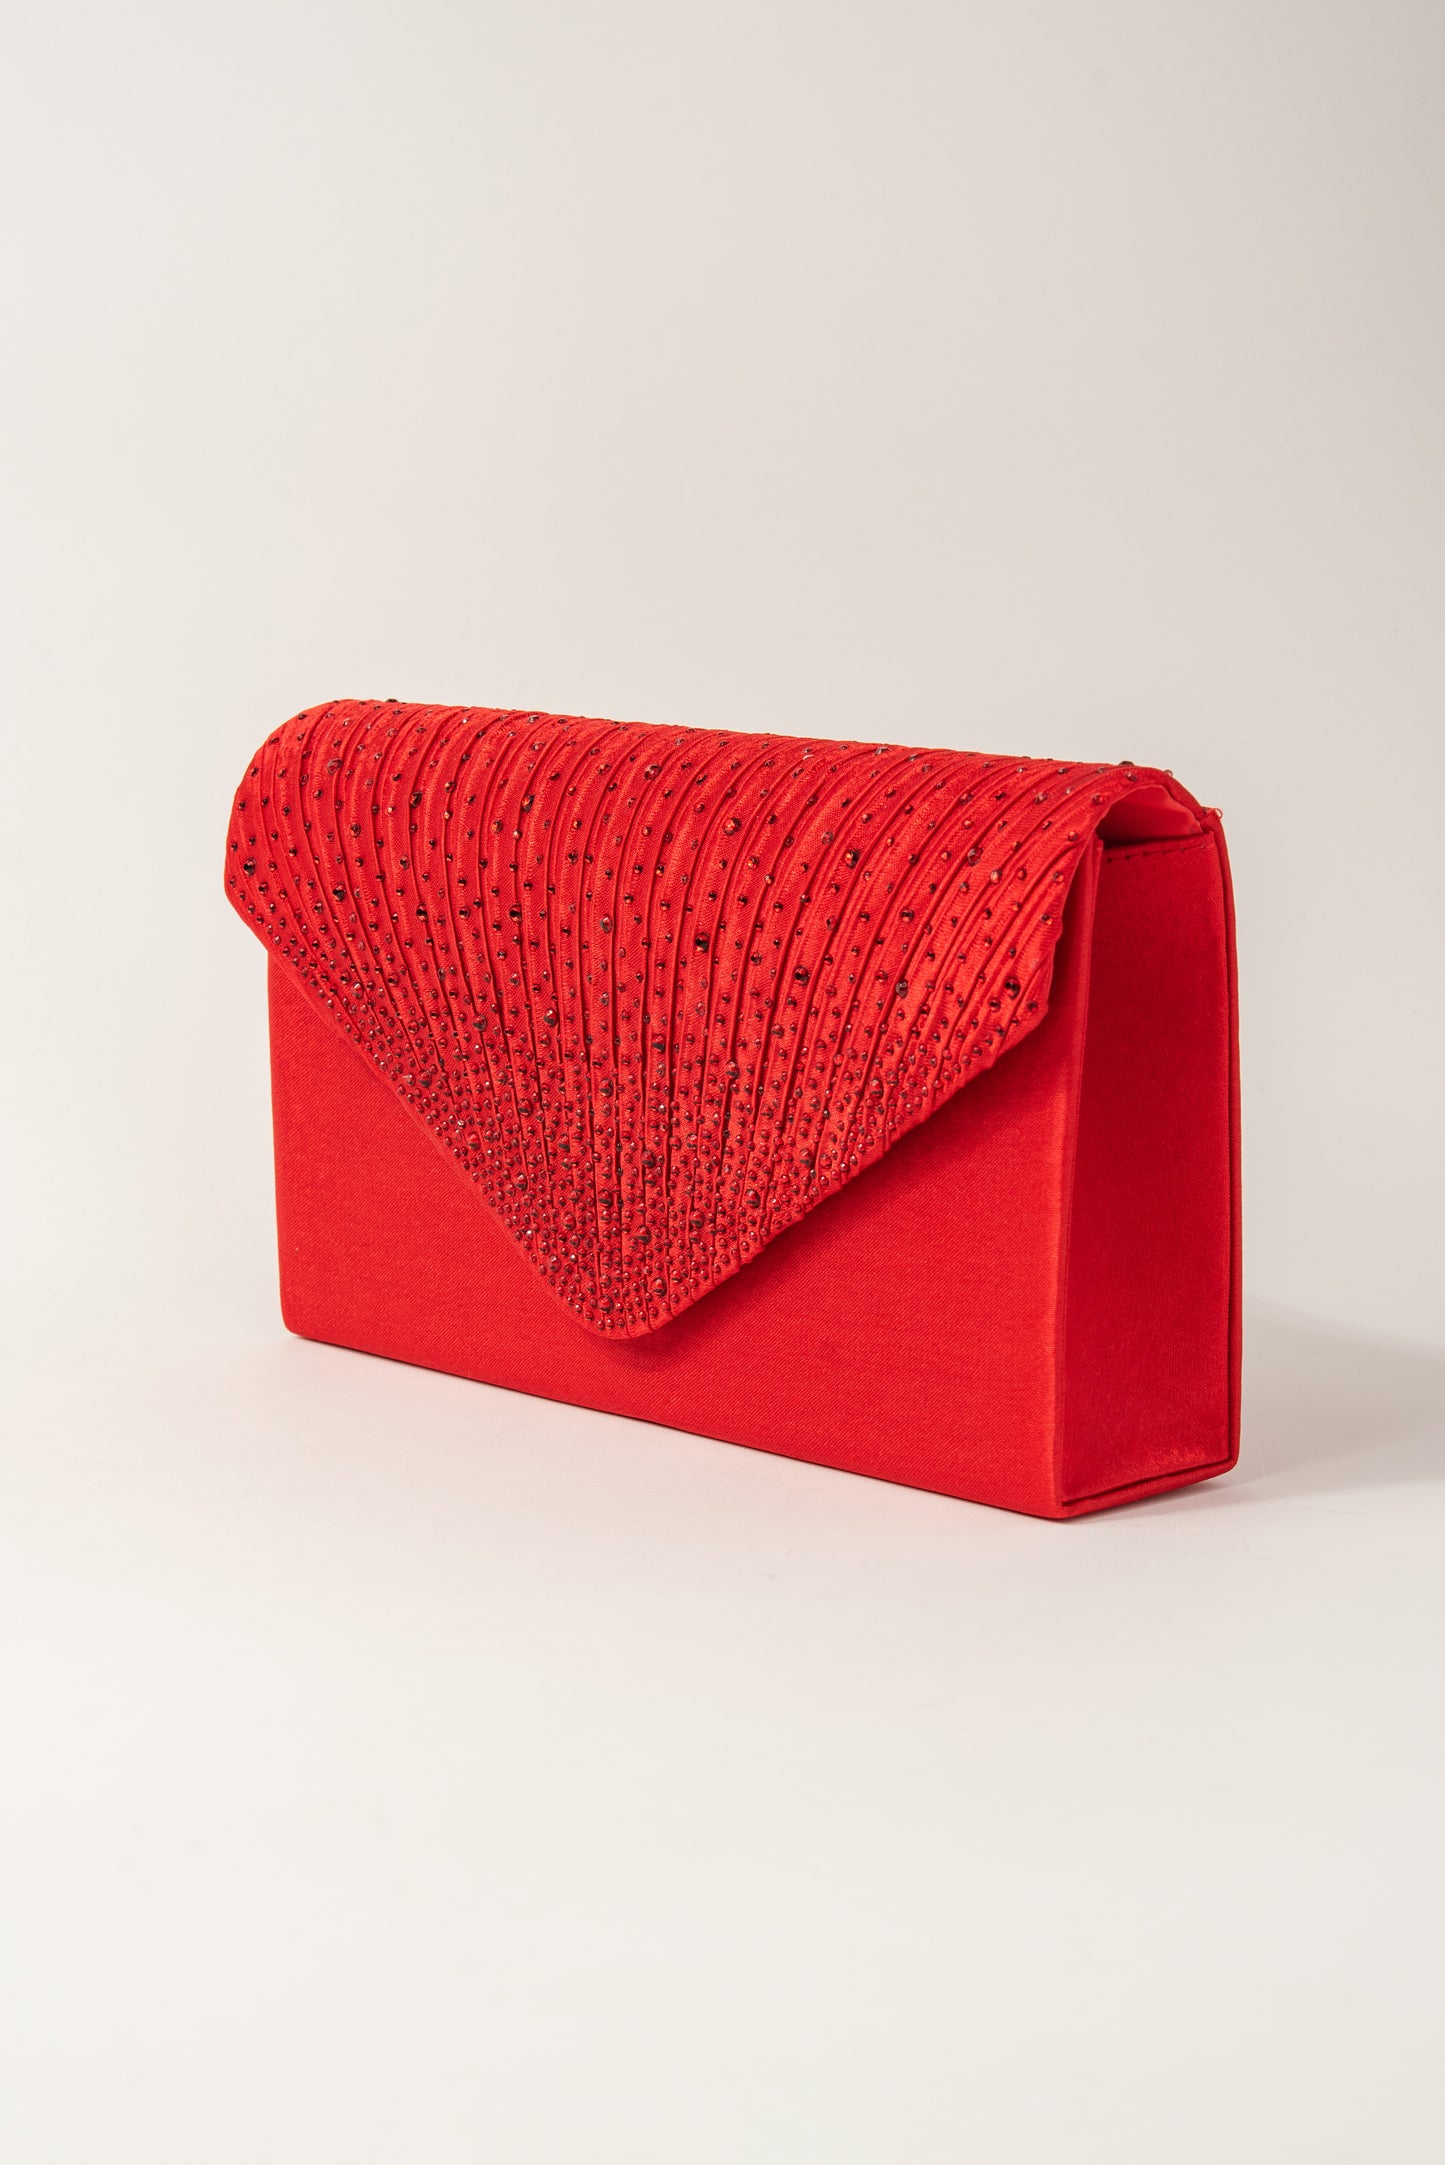 Rhinestone Envelope Clutch Purse Crossbody Evening Bag - Red